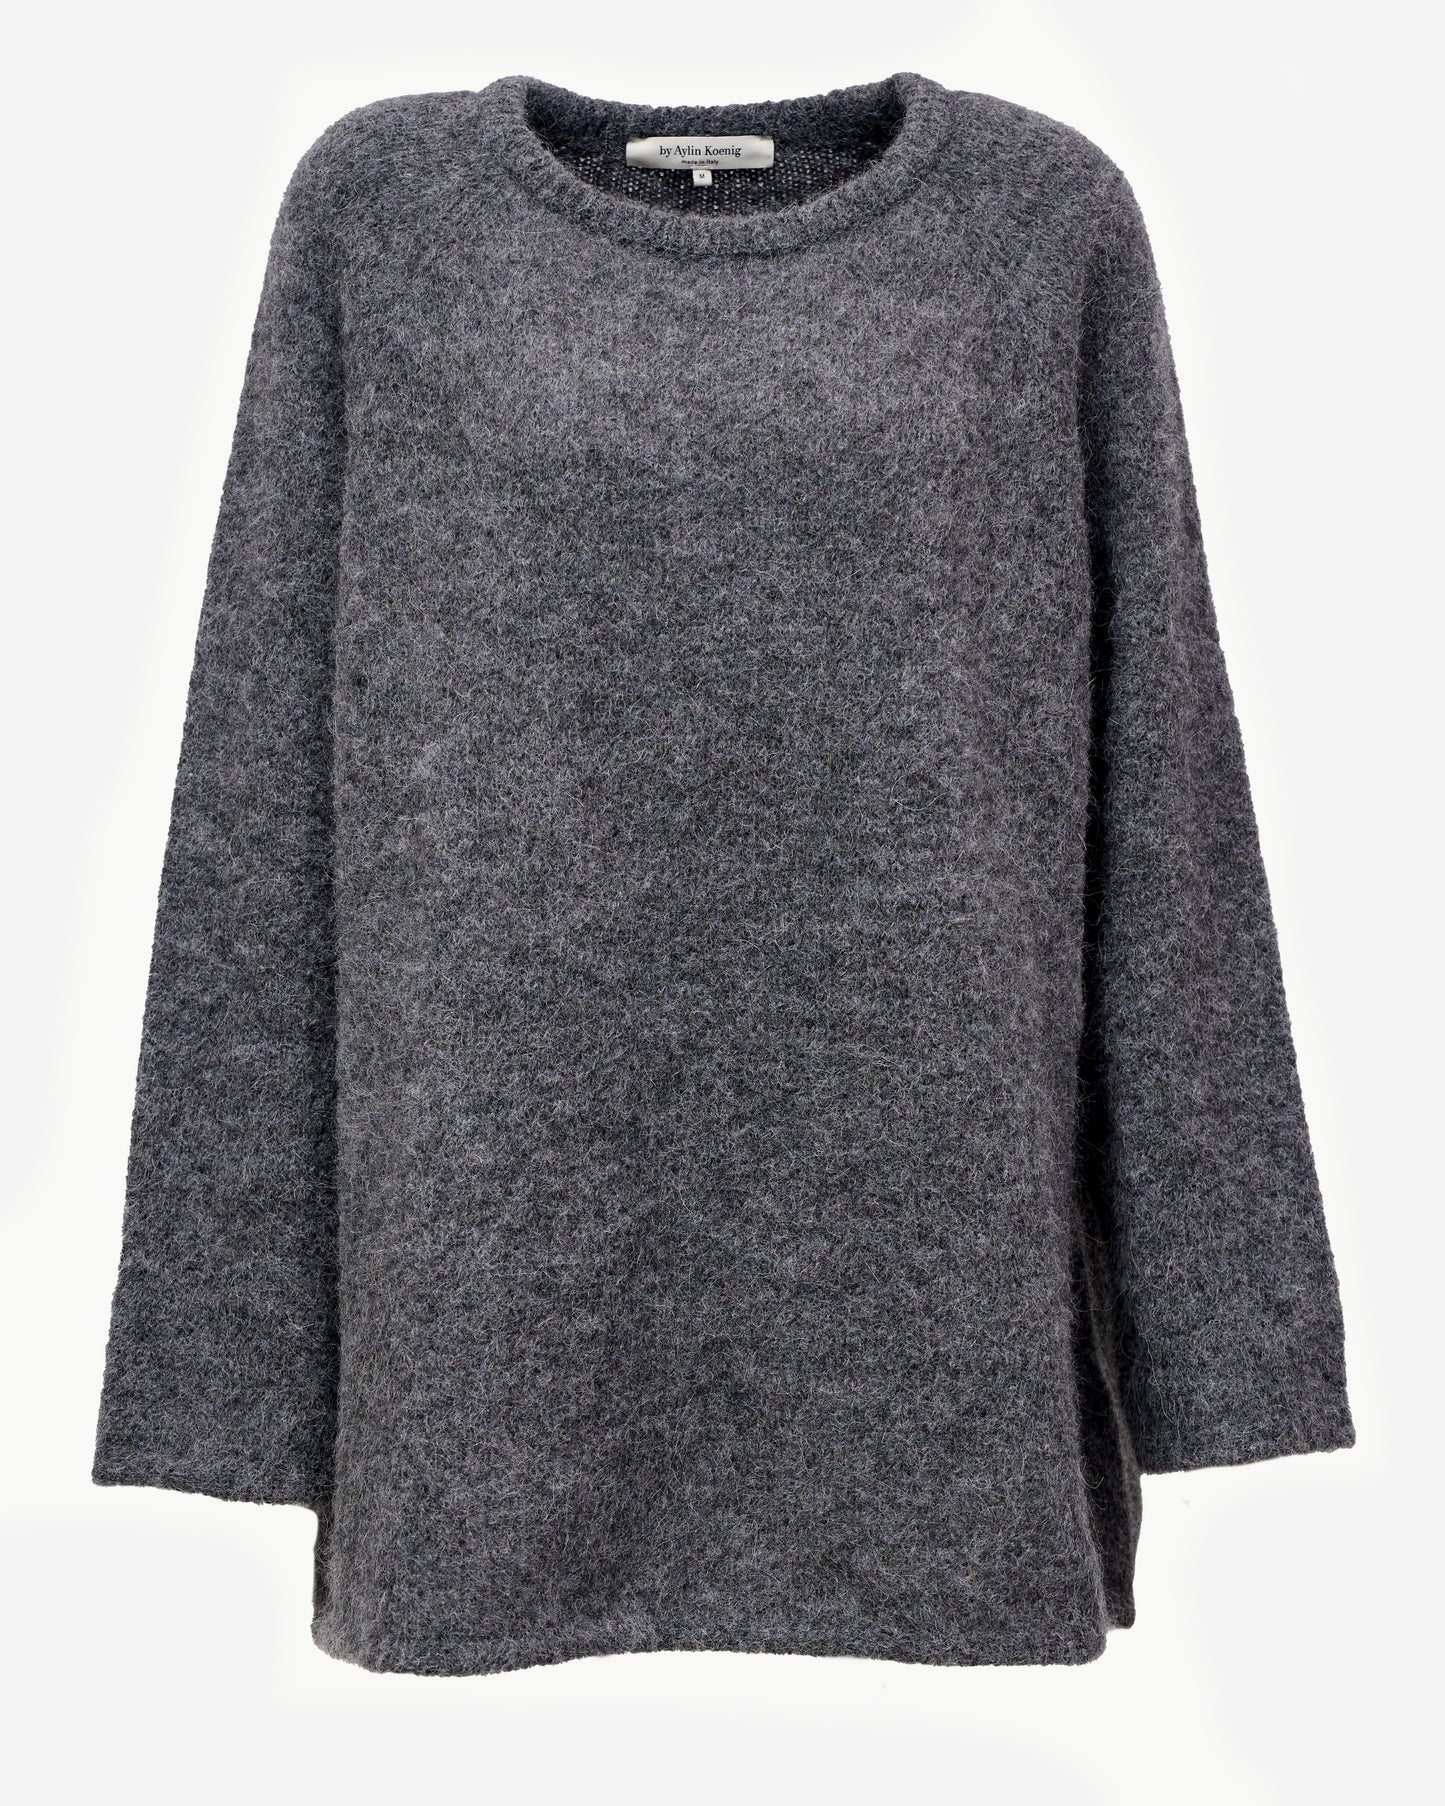 Sweater LOUMI (Vienna exclusive)